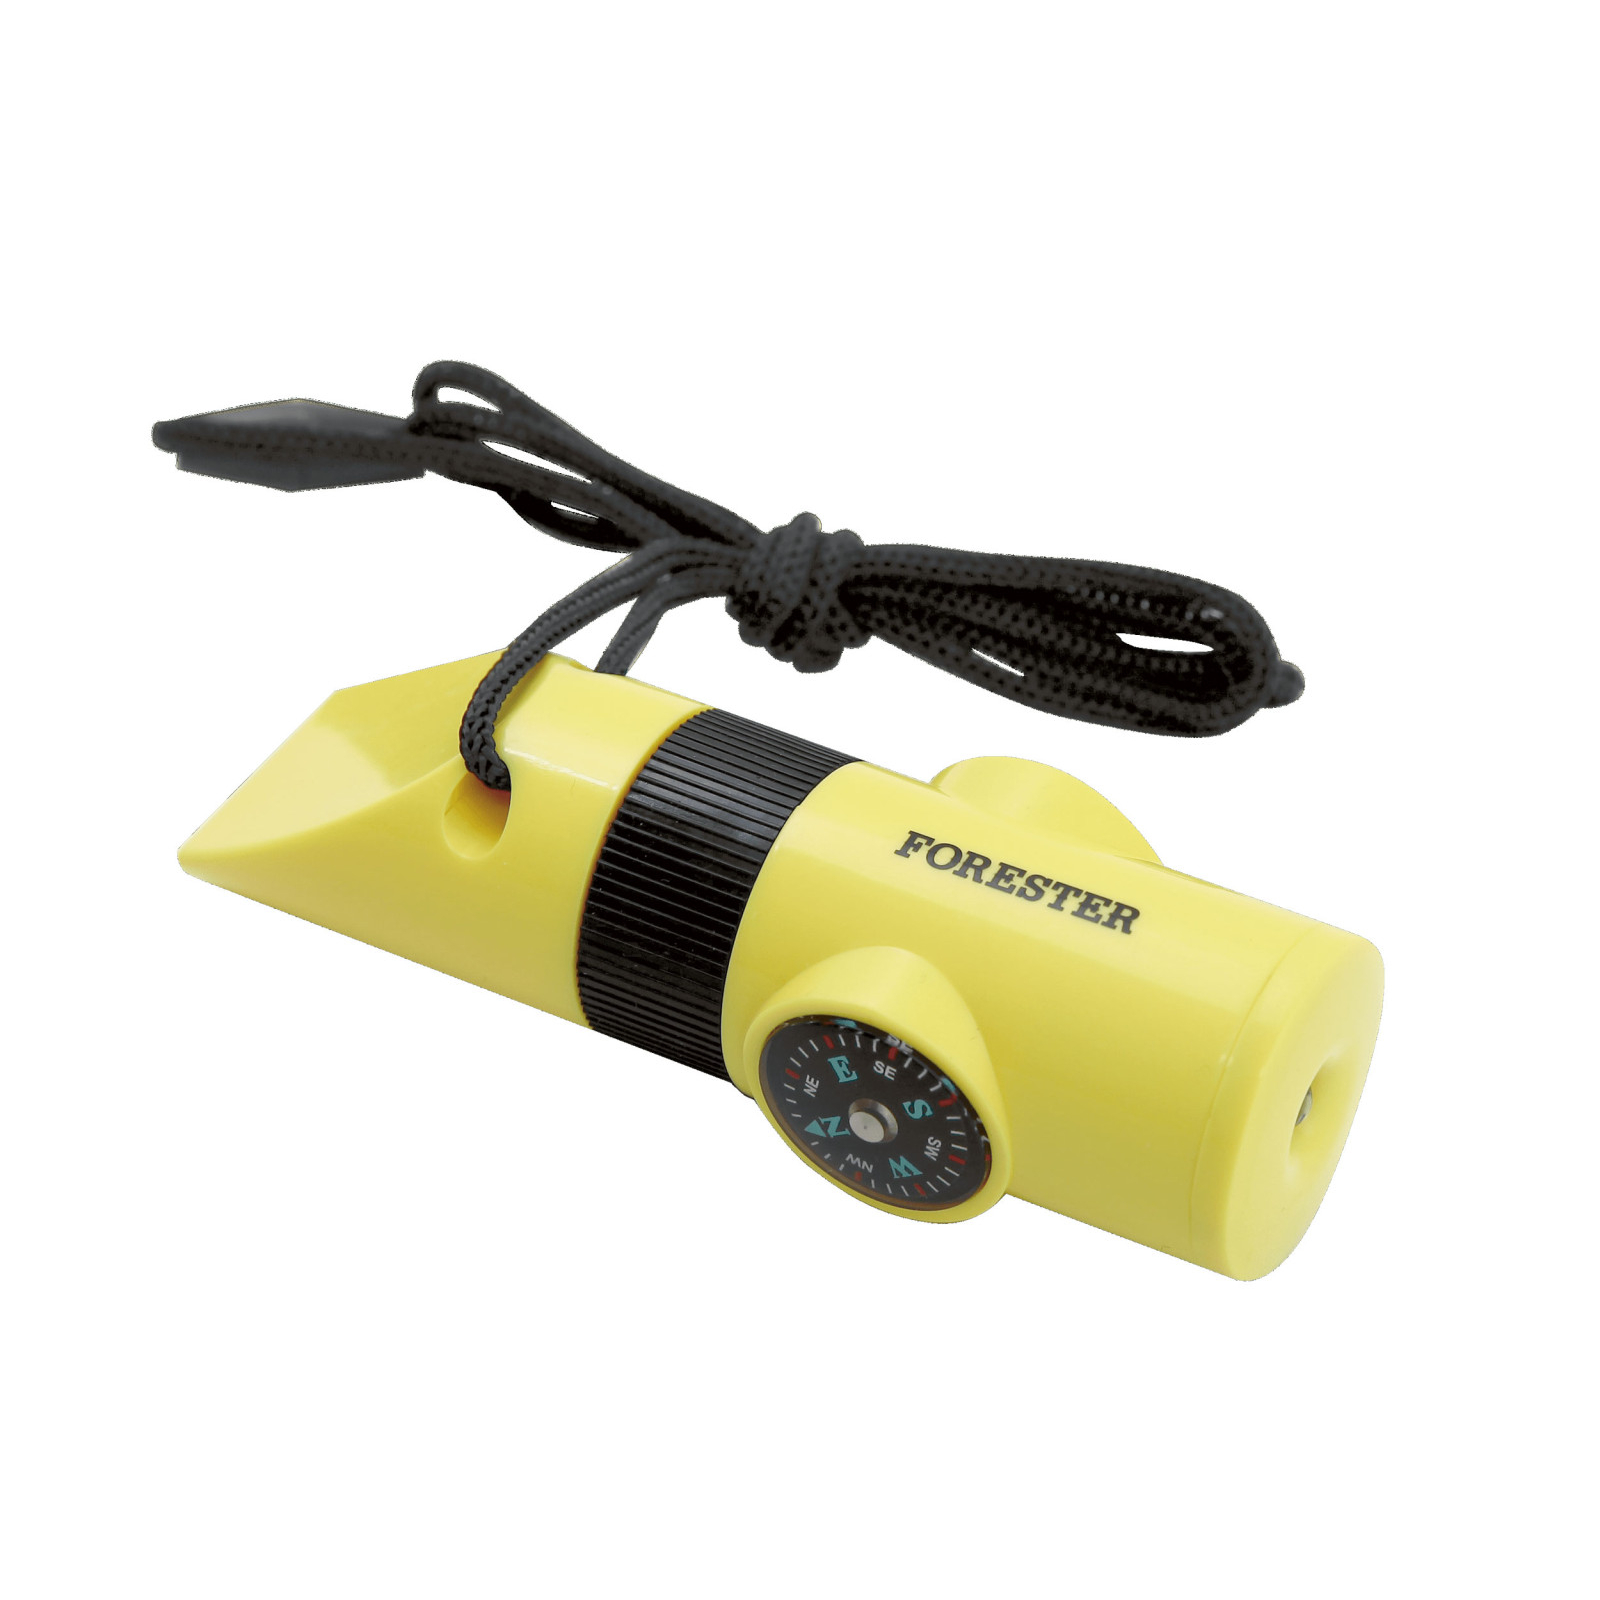 Свисток-фонарик с компасом Forester Mobile жёлтый с чёрным 10х3,3х2,8 см, цвет чёрный